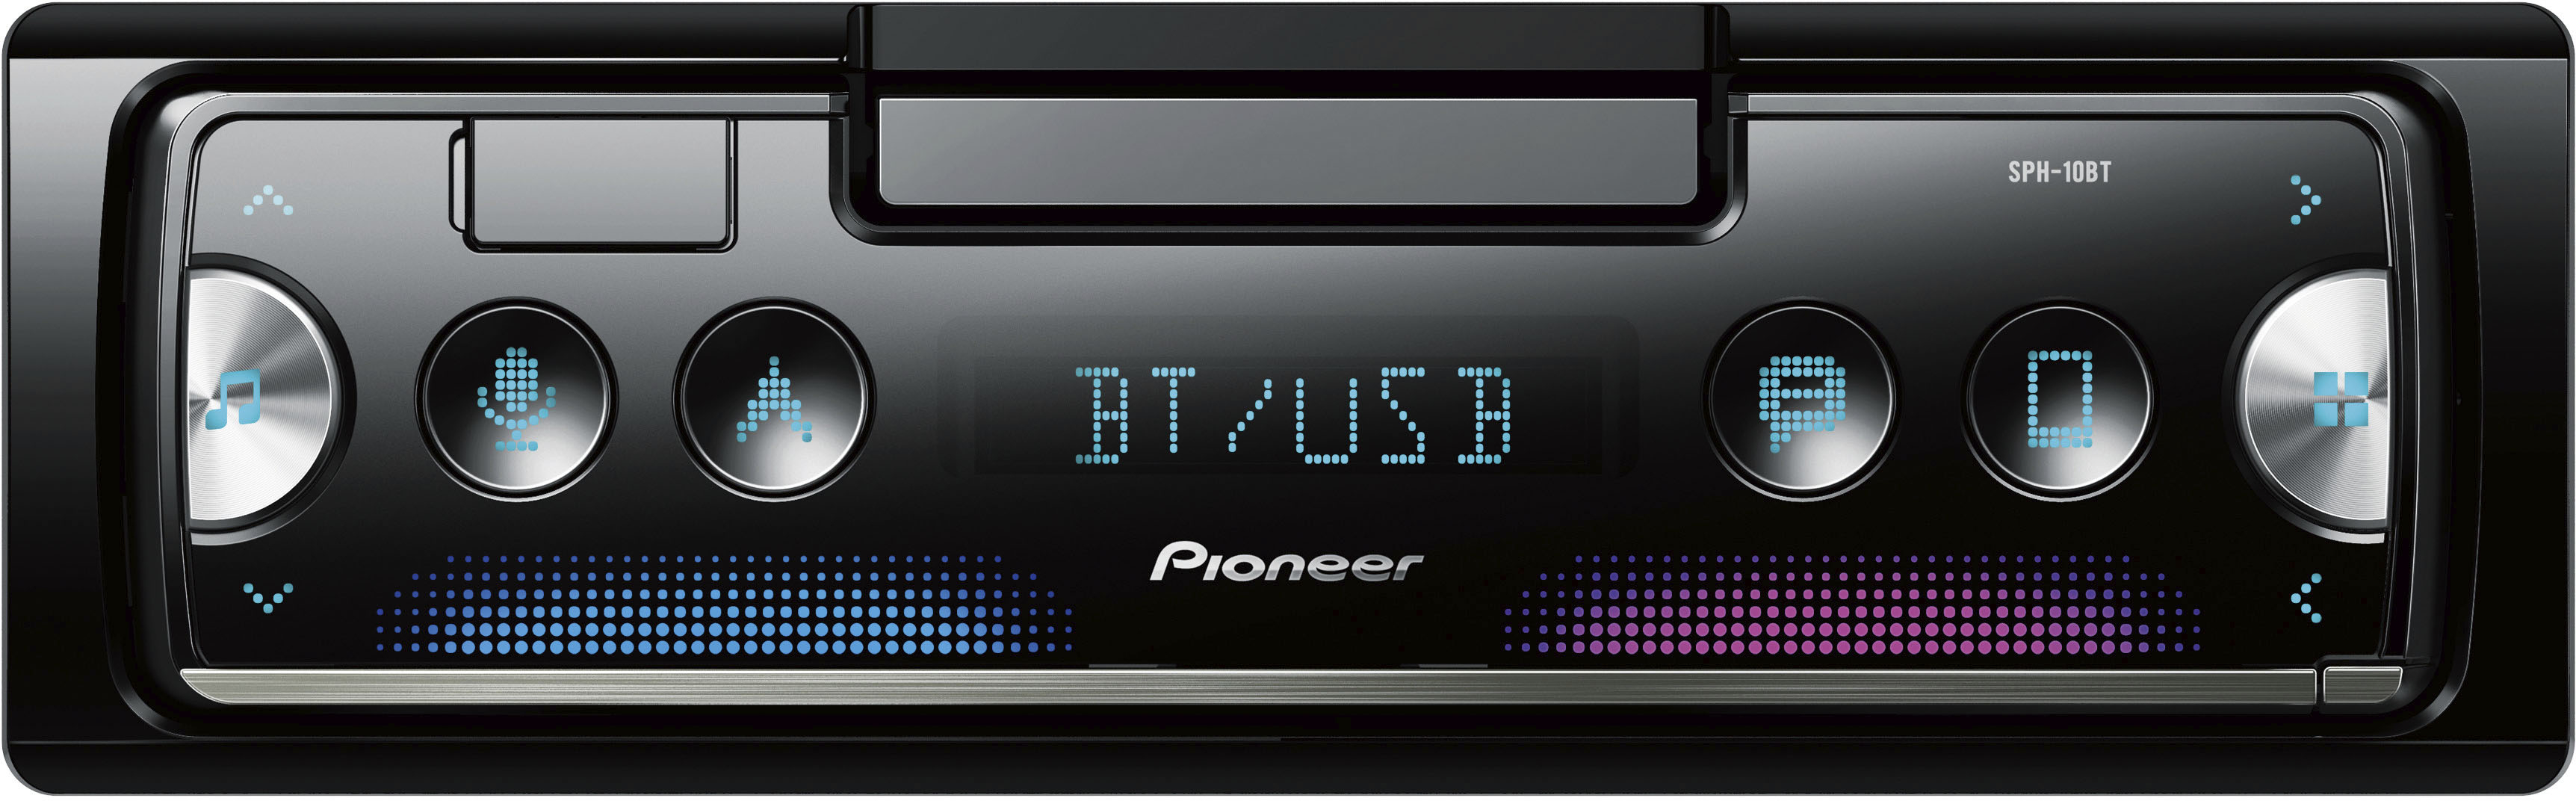 Autoradio Pioneer SPH-C10BT - Negro - Shopstar